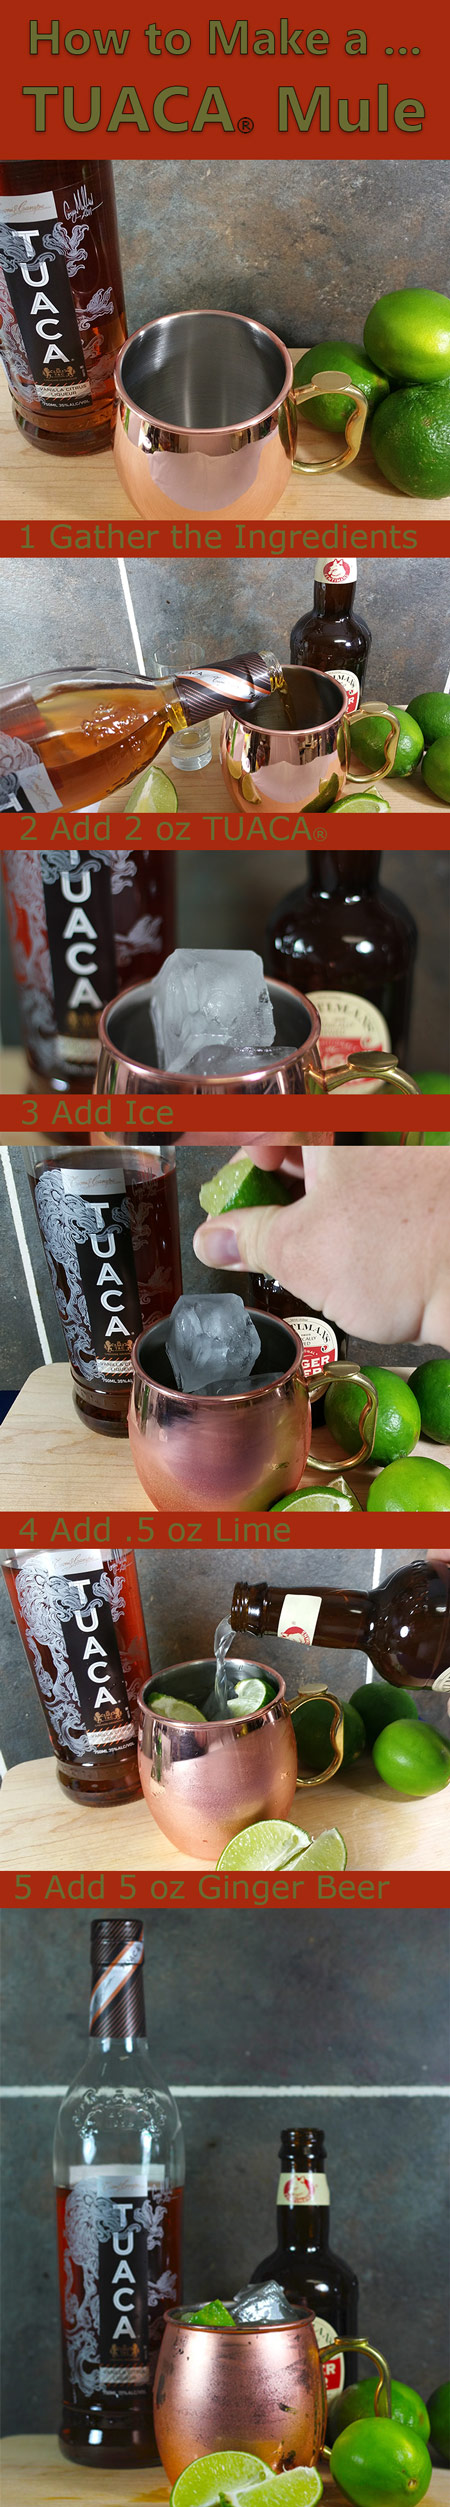 TUACA Cocktail Recipe - How to Make a TUACA Mule